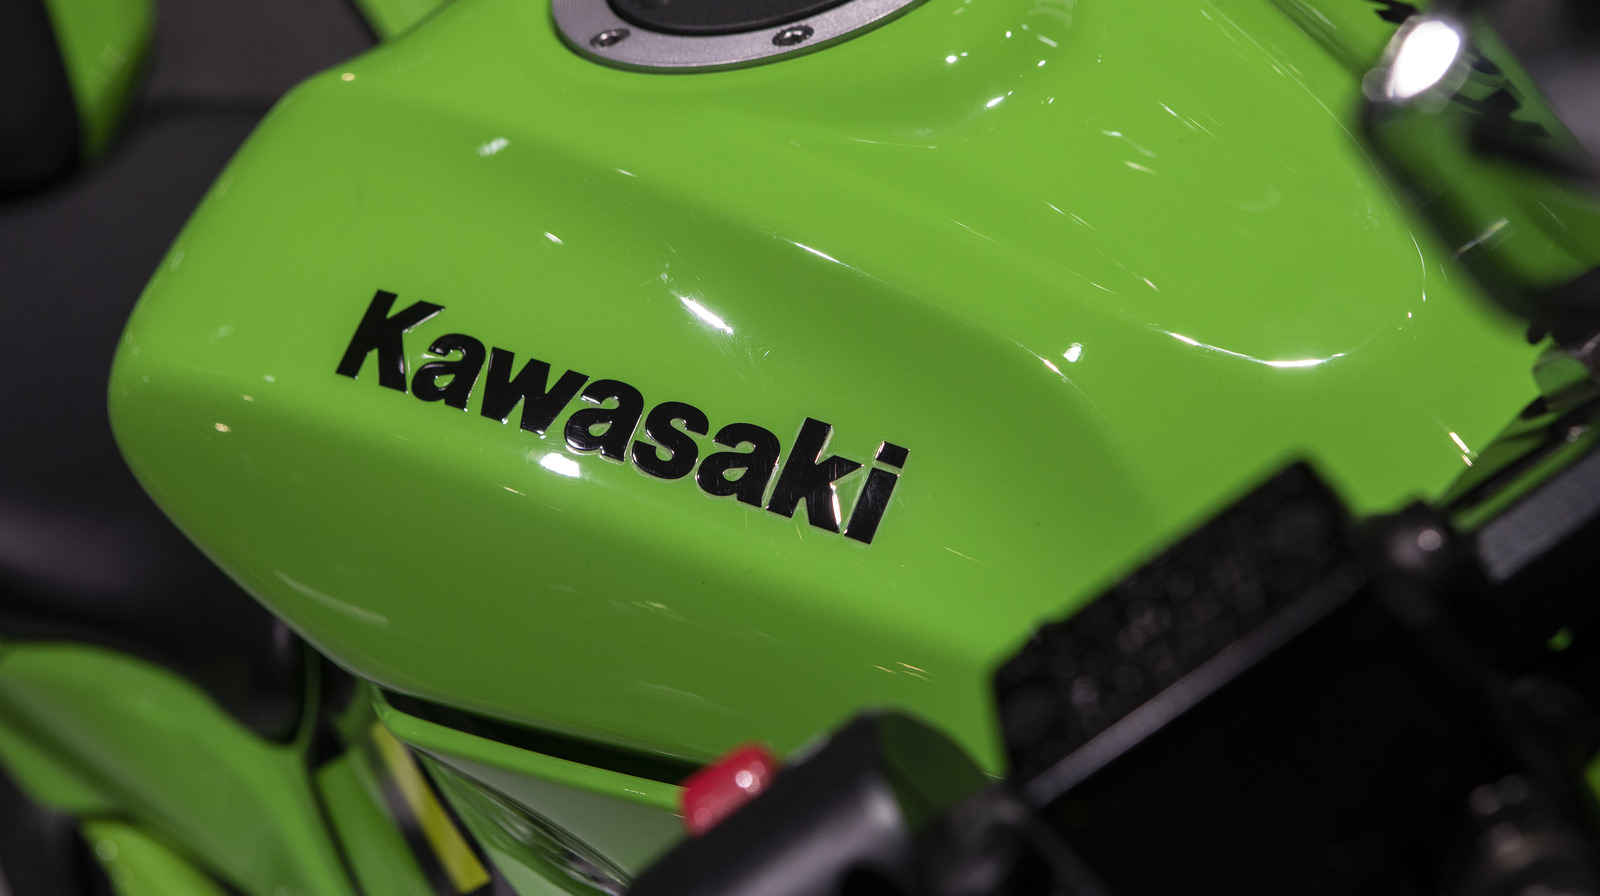 La KR1000 de Kawasaki era una motocicleta de resistencia dominante